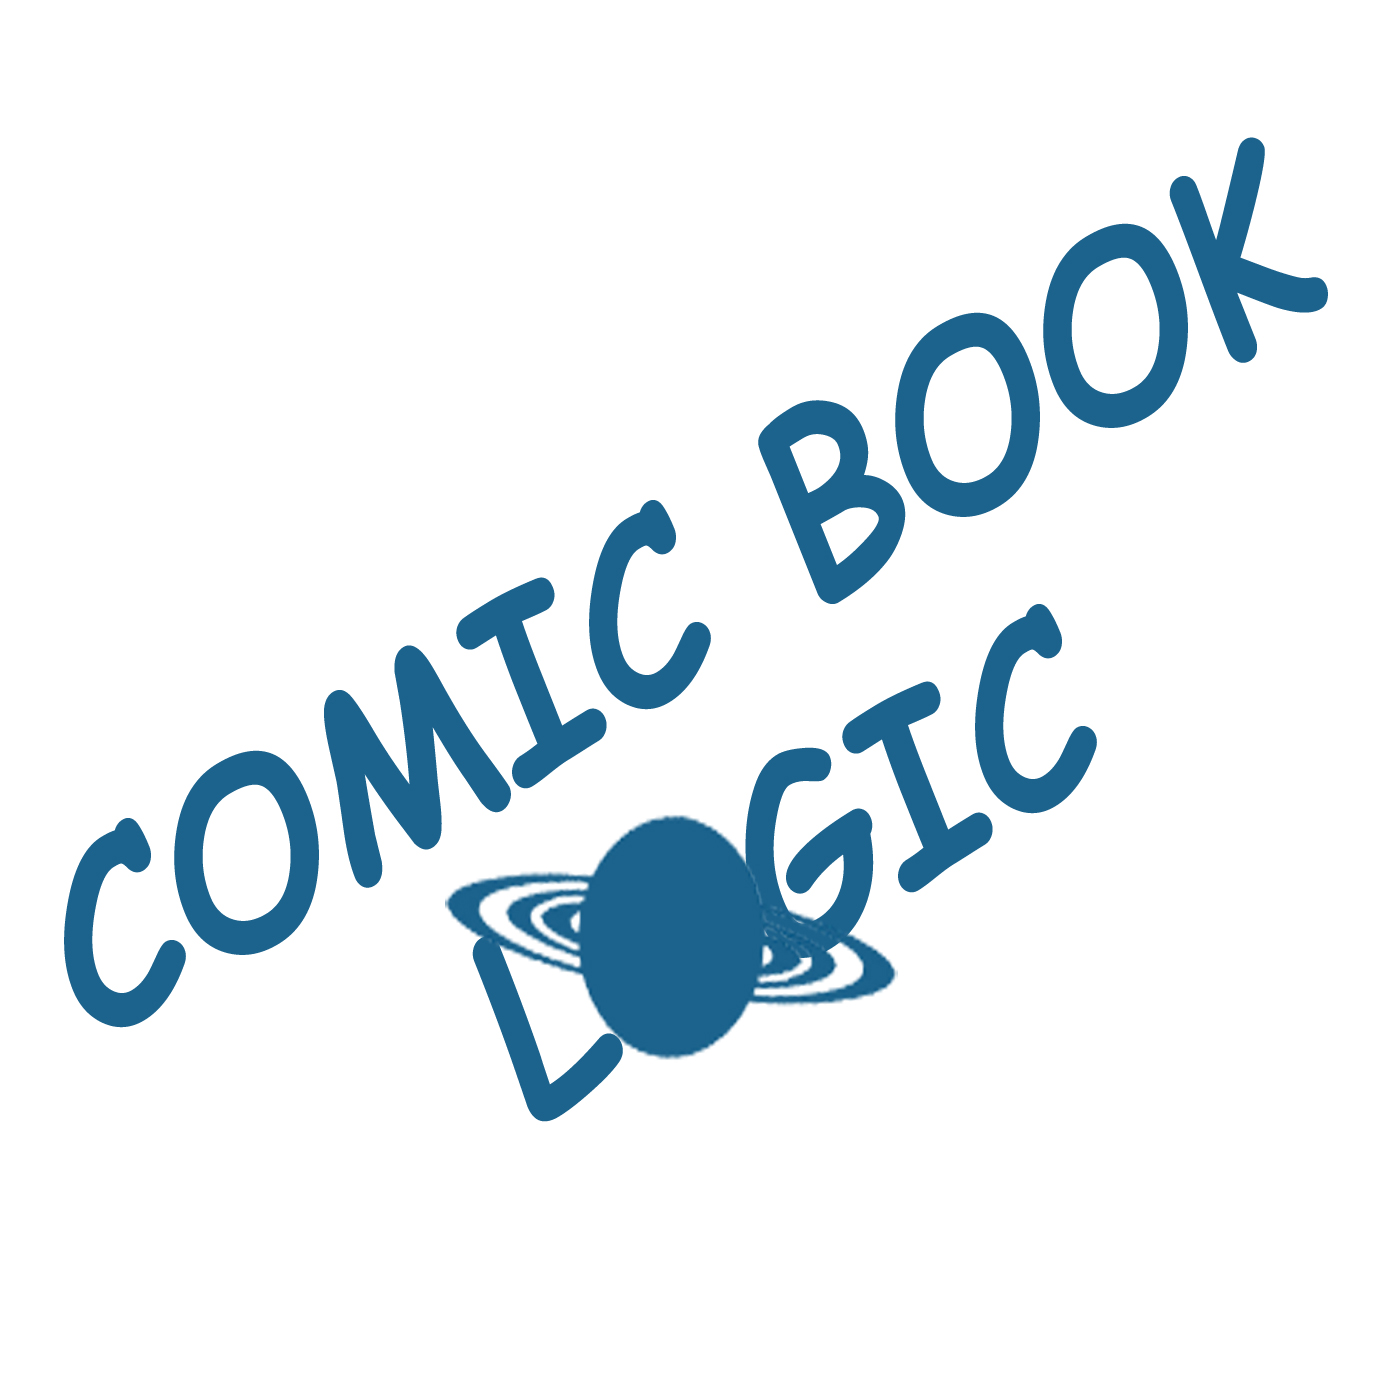 Comic Book Logic- It’s the Great Pumpkin Charlie Brown (1966)